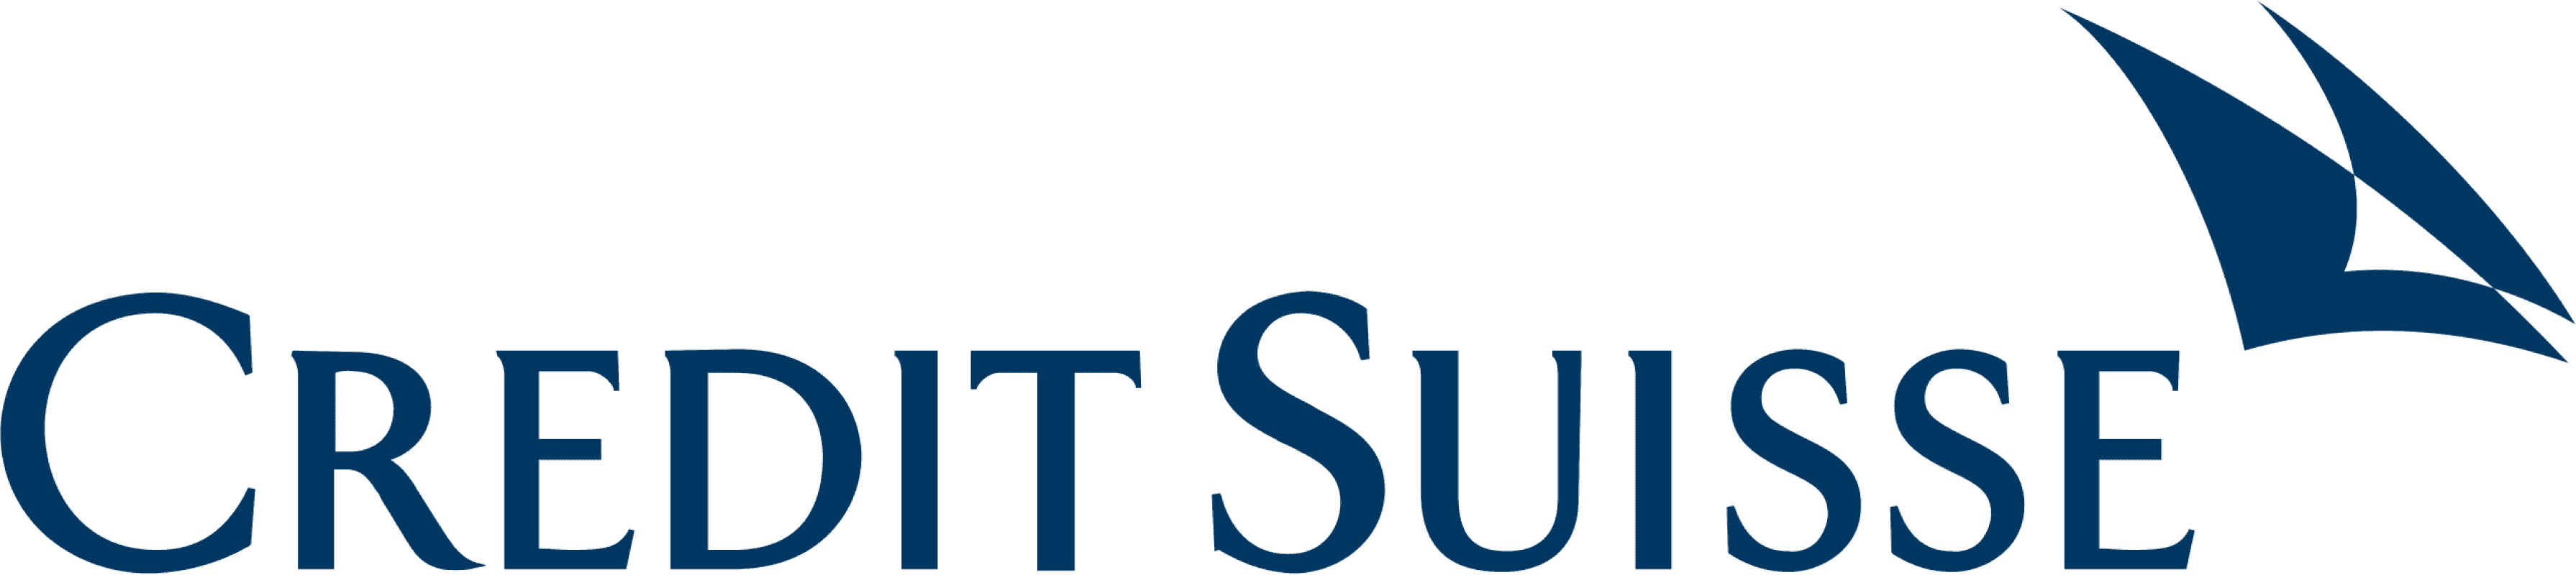 Credit Suisse - logo